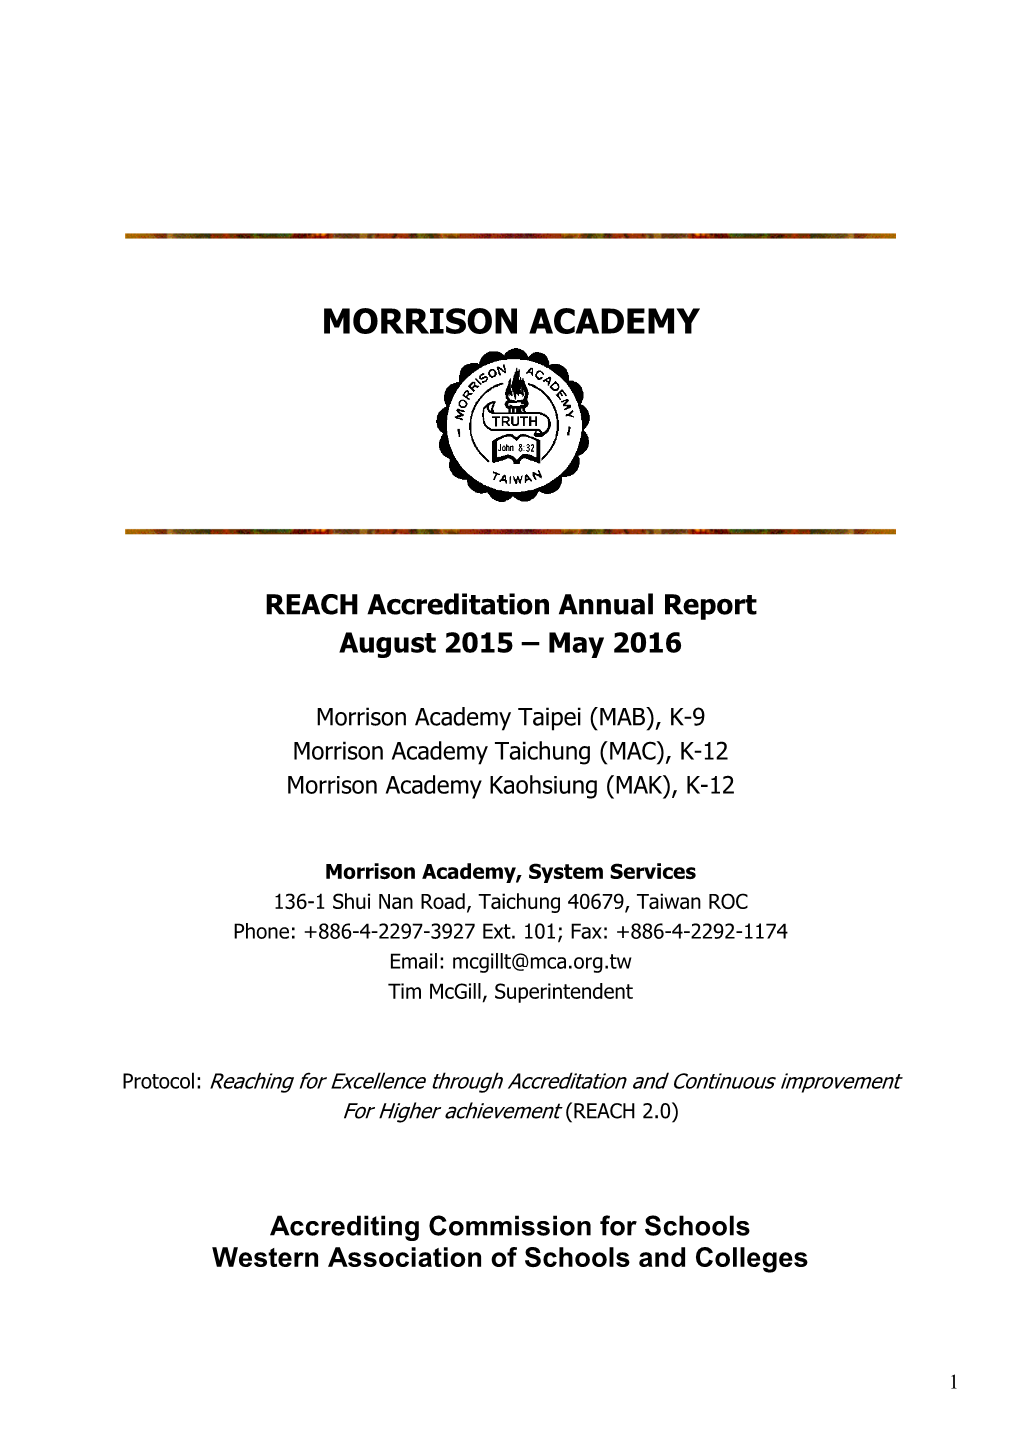 2015-16 Accreditation Annual Report